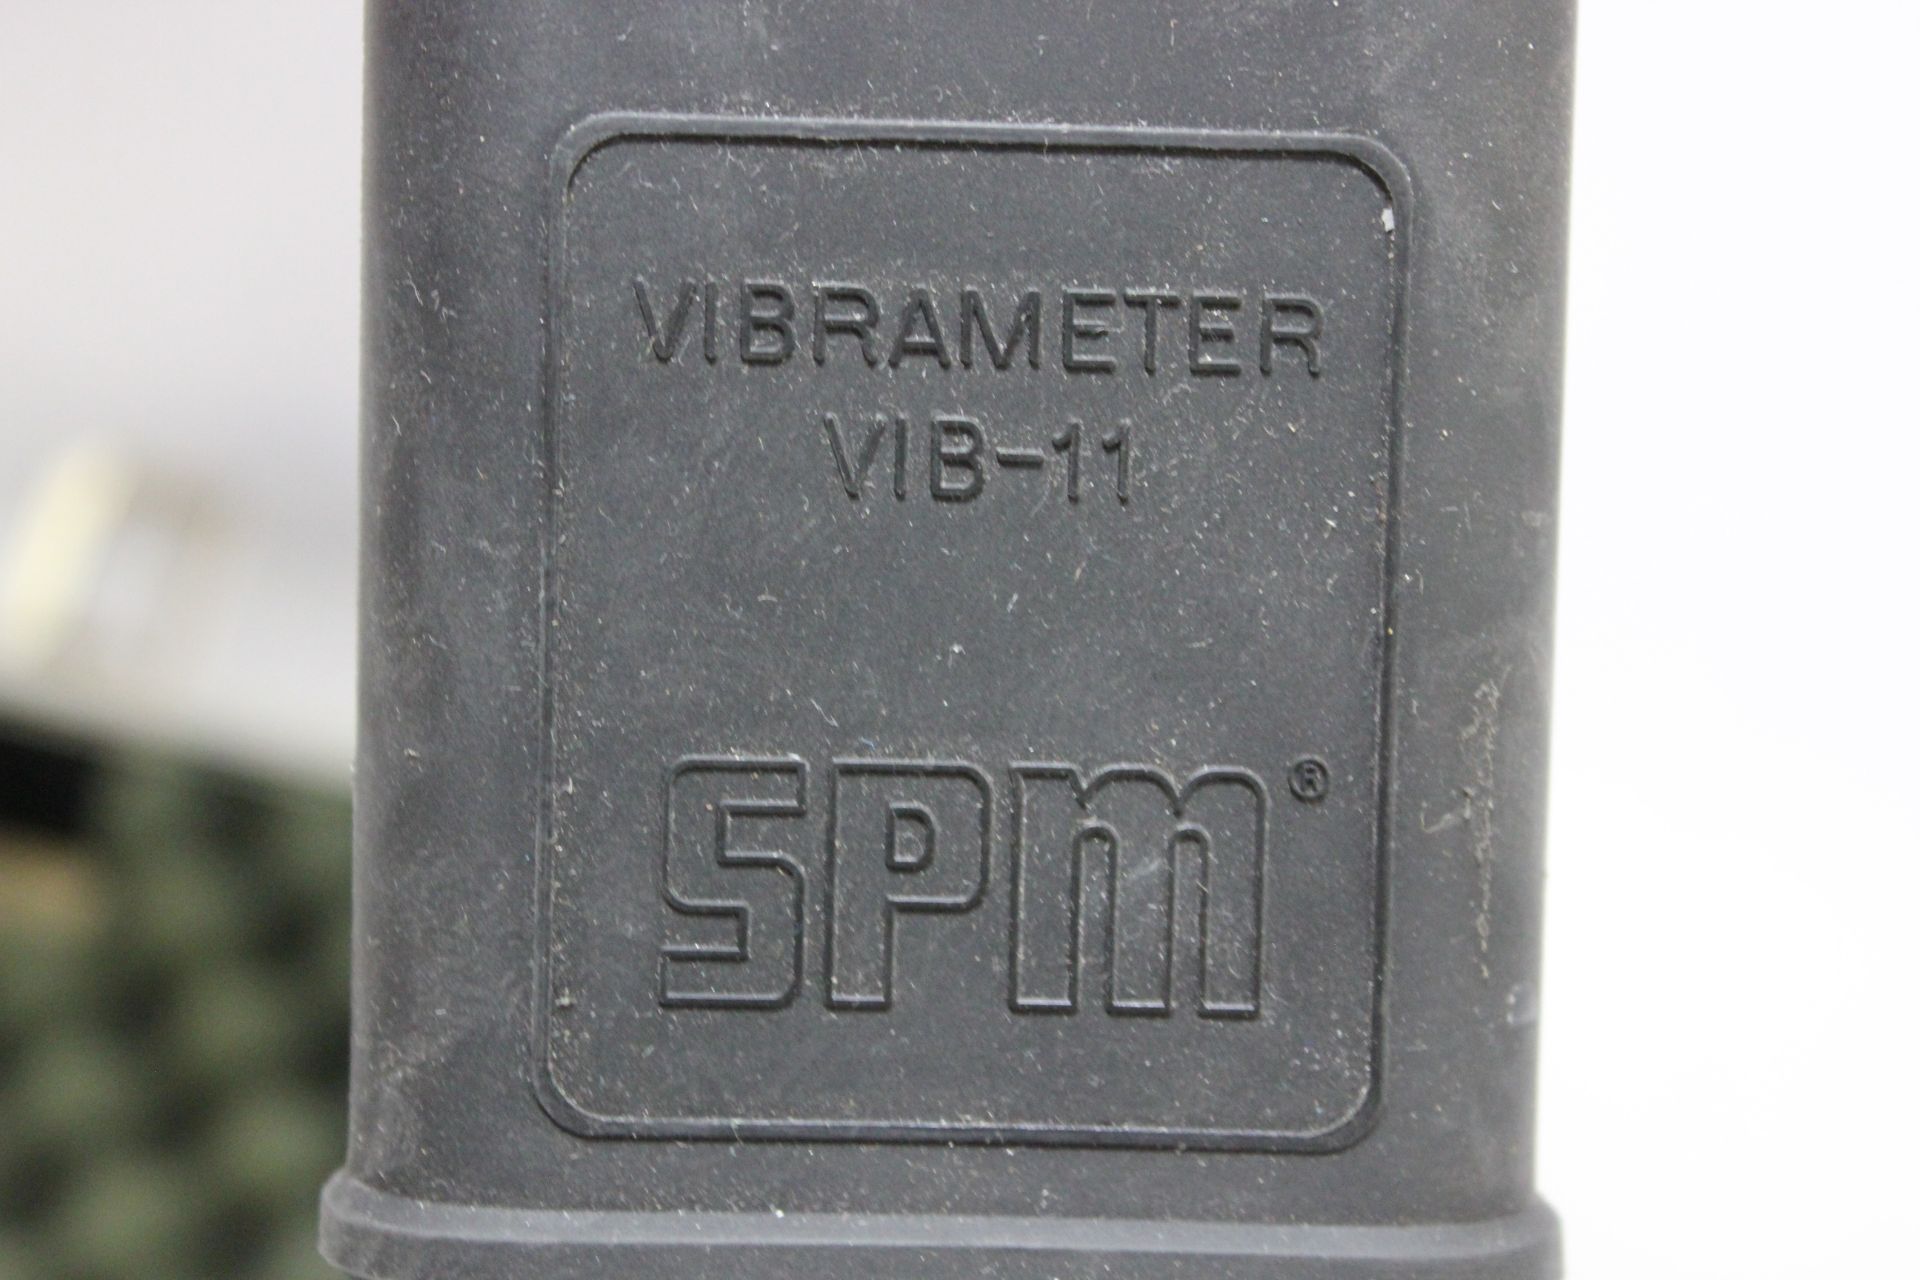 SPM VIBRAMETER VIBRATION METER - Image 4 of 7